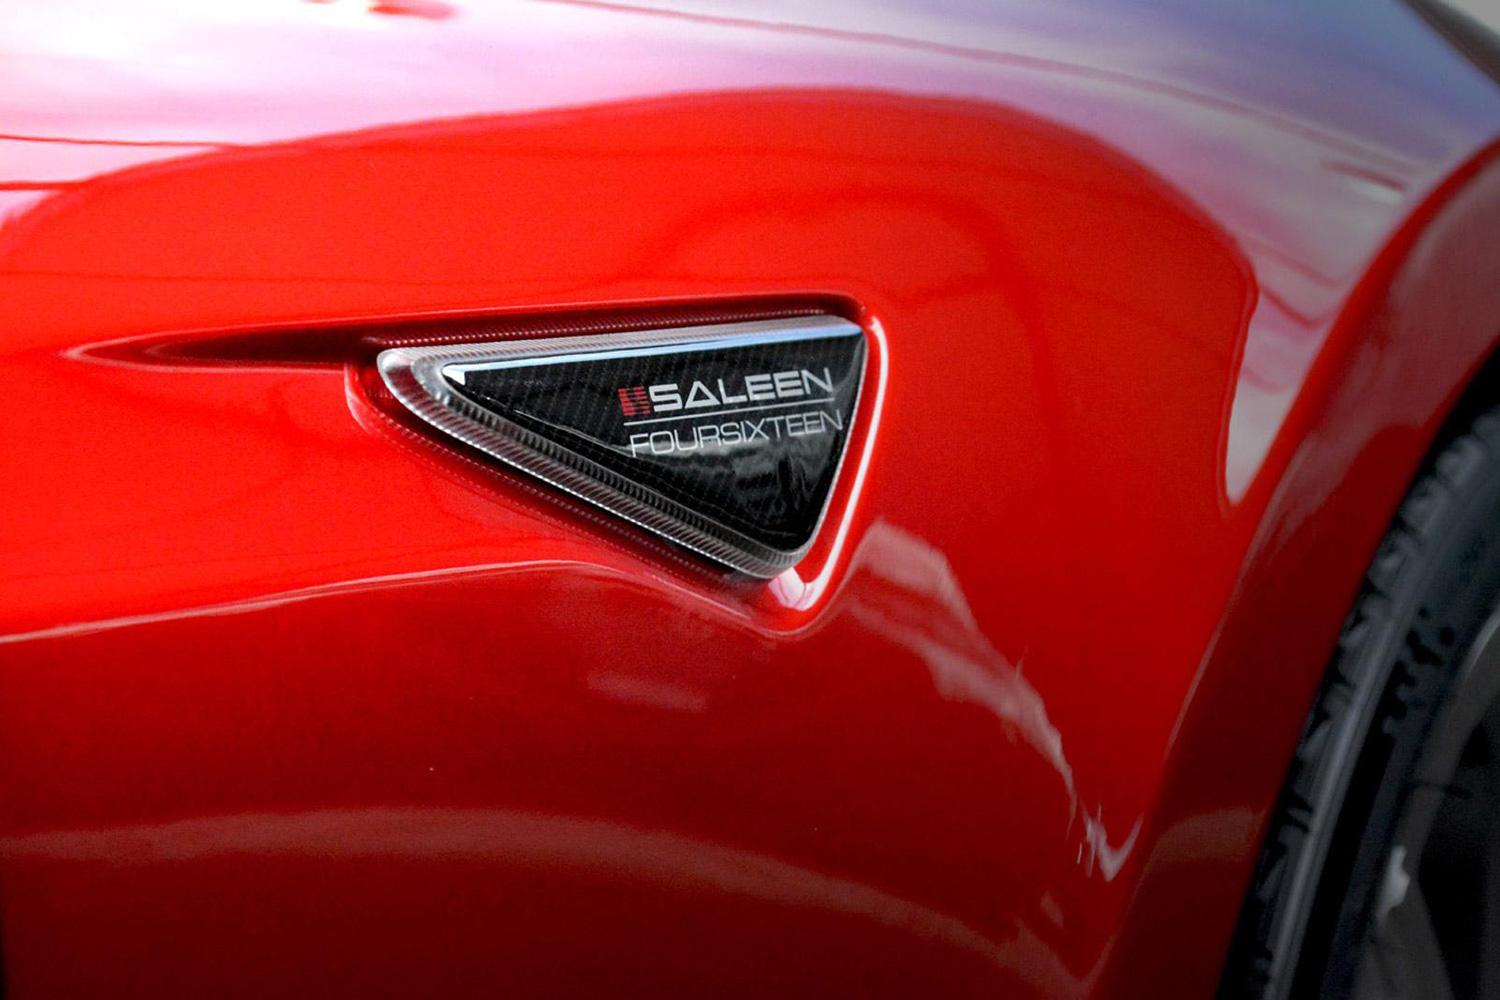 Saleen Foursixteen modified Tesla Model S